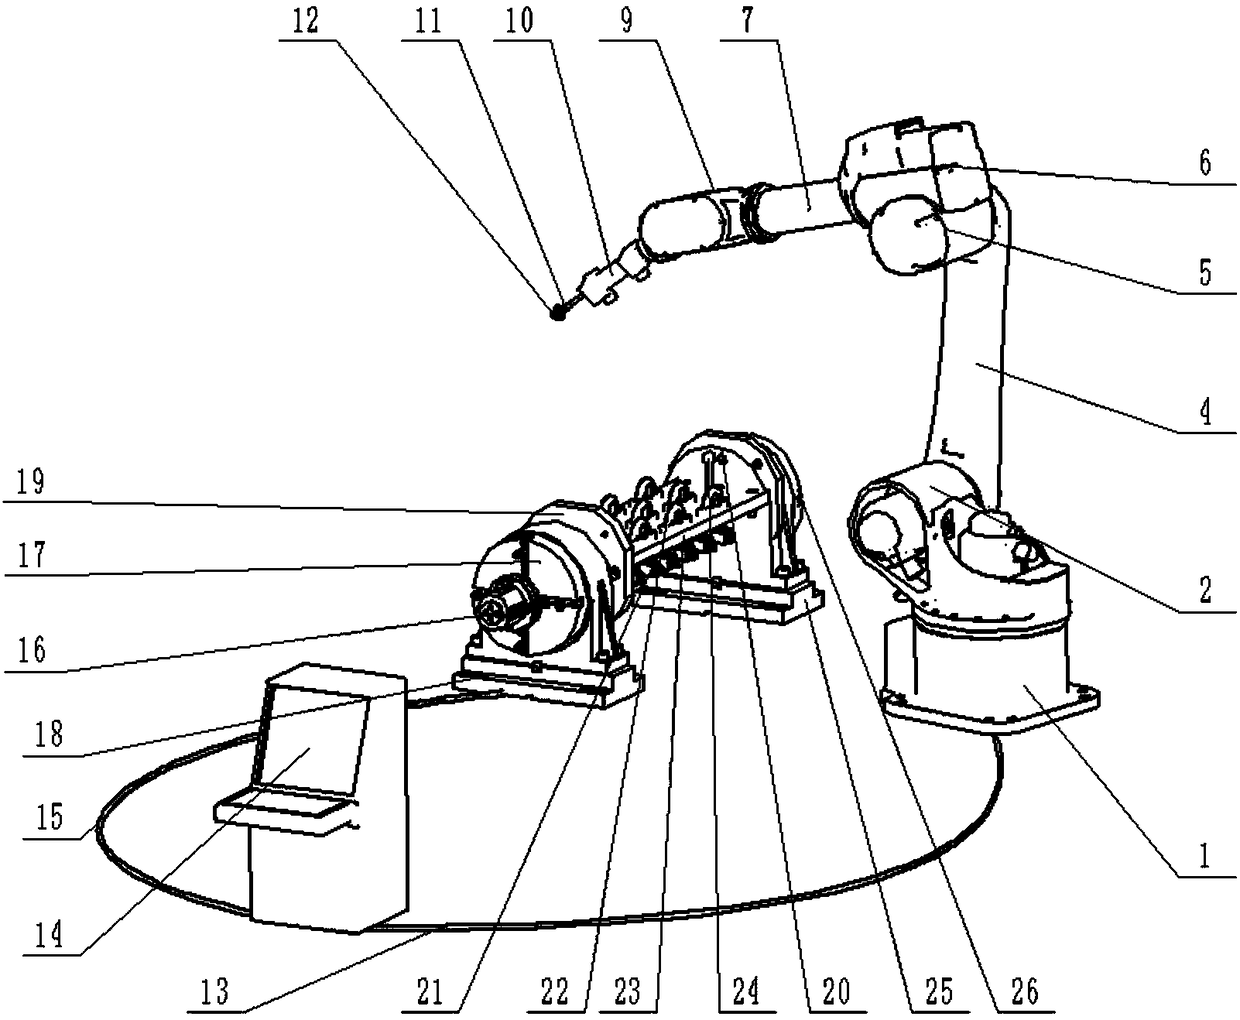 Laser scanning grinding system and method